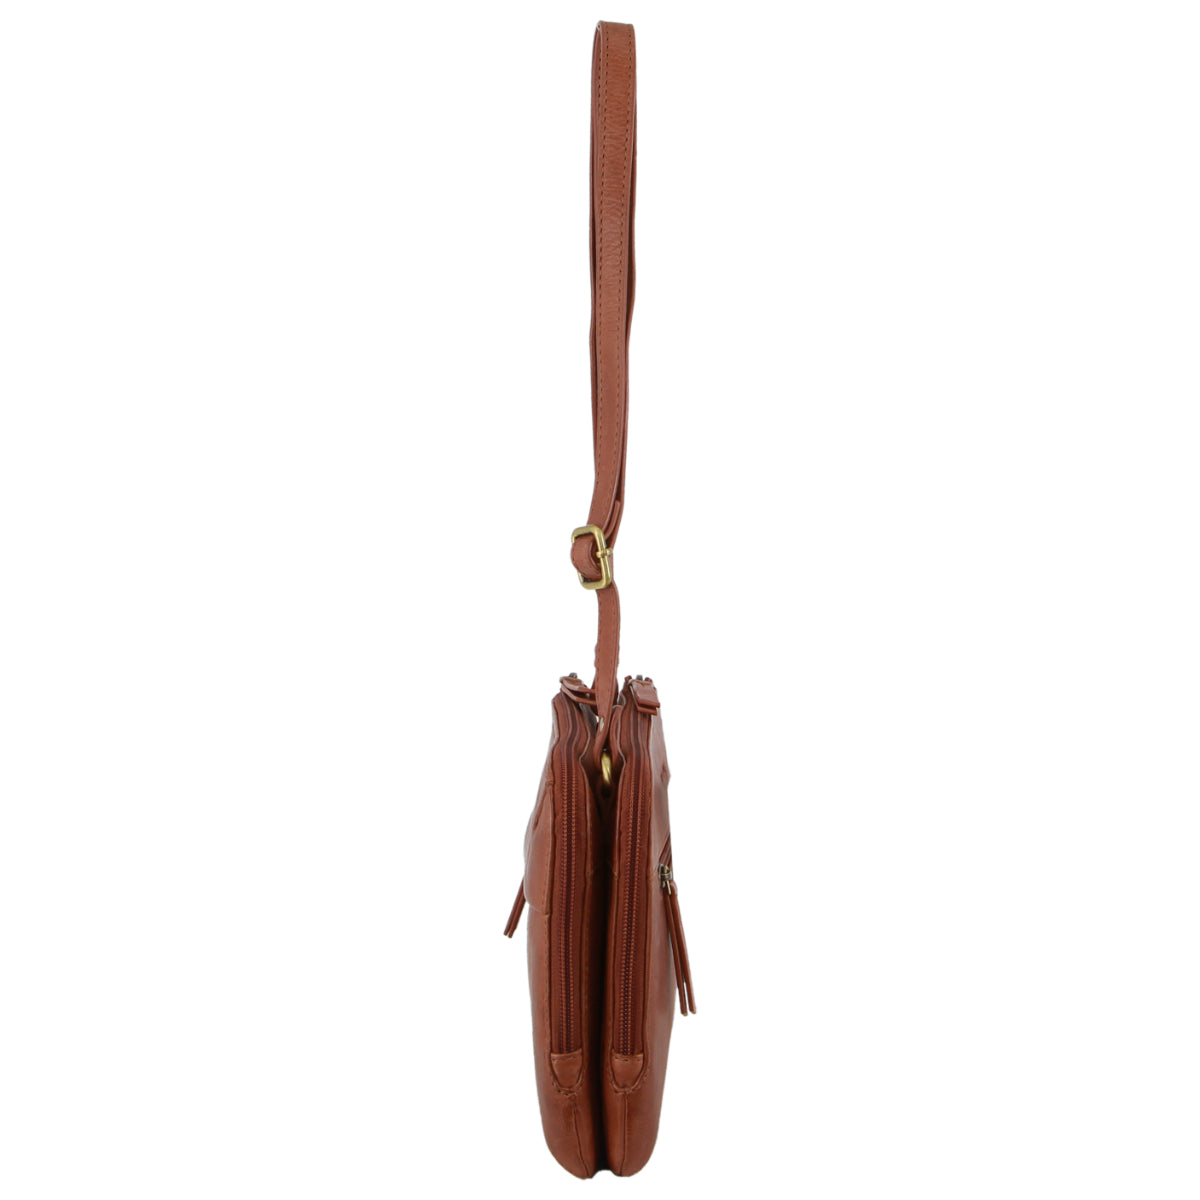 Pierre Cardin Leather Ladies Crossbody Bag in Tan